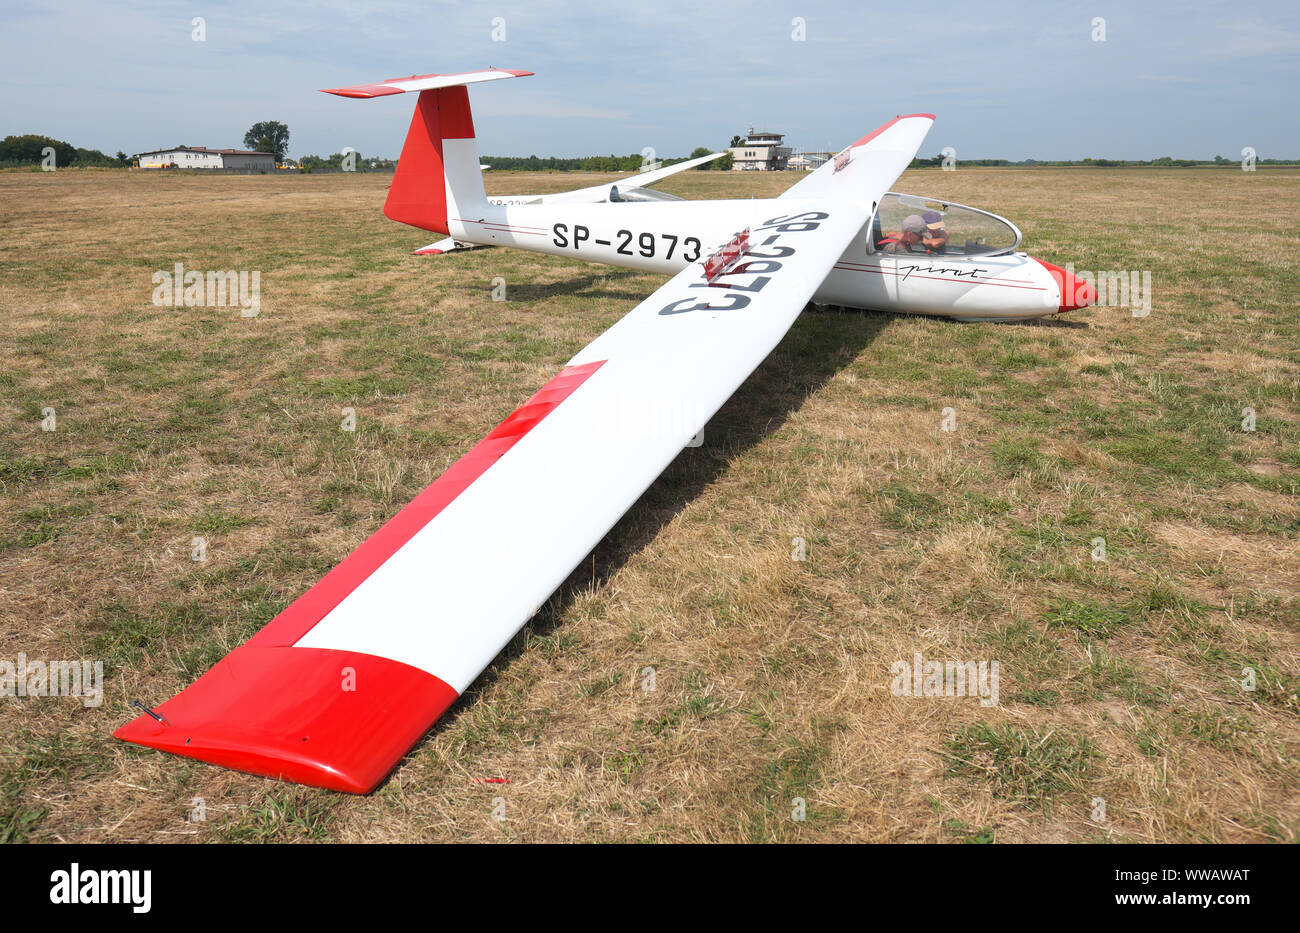 Gliding club SZD 30 Pirat glider at Stalowa Wola airfield in Poland in August 2019 Stock Photo